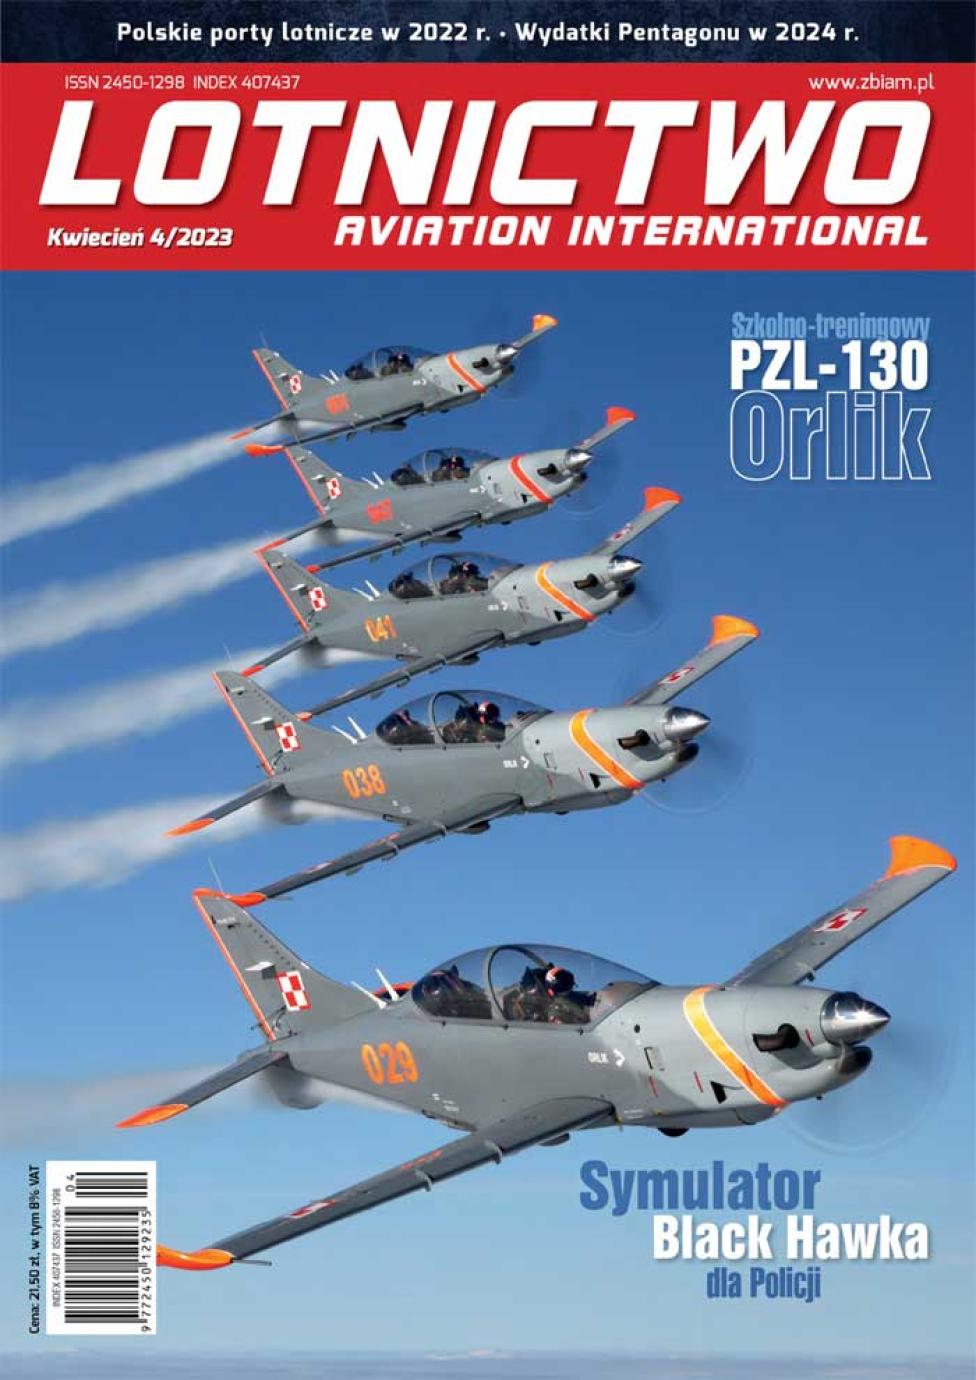 Lotnictwo Aviation International 4/2023